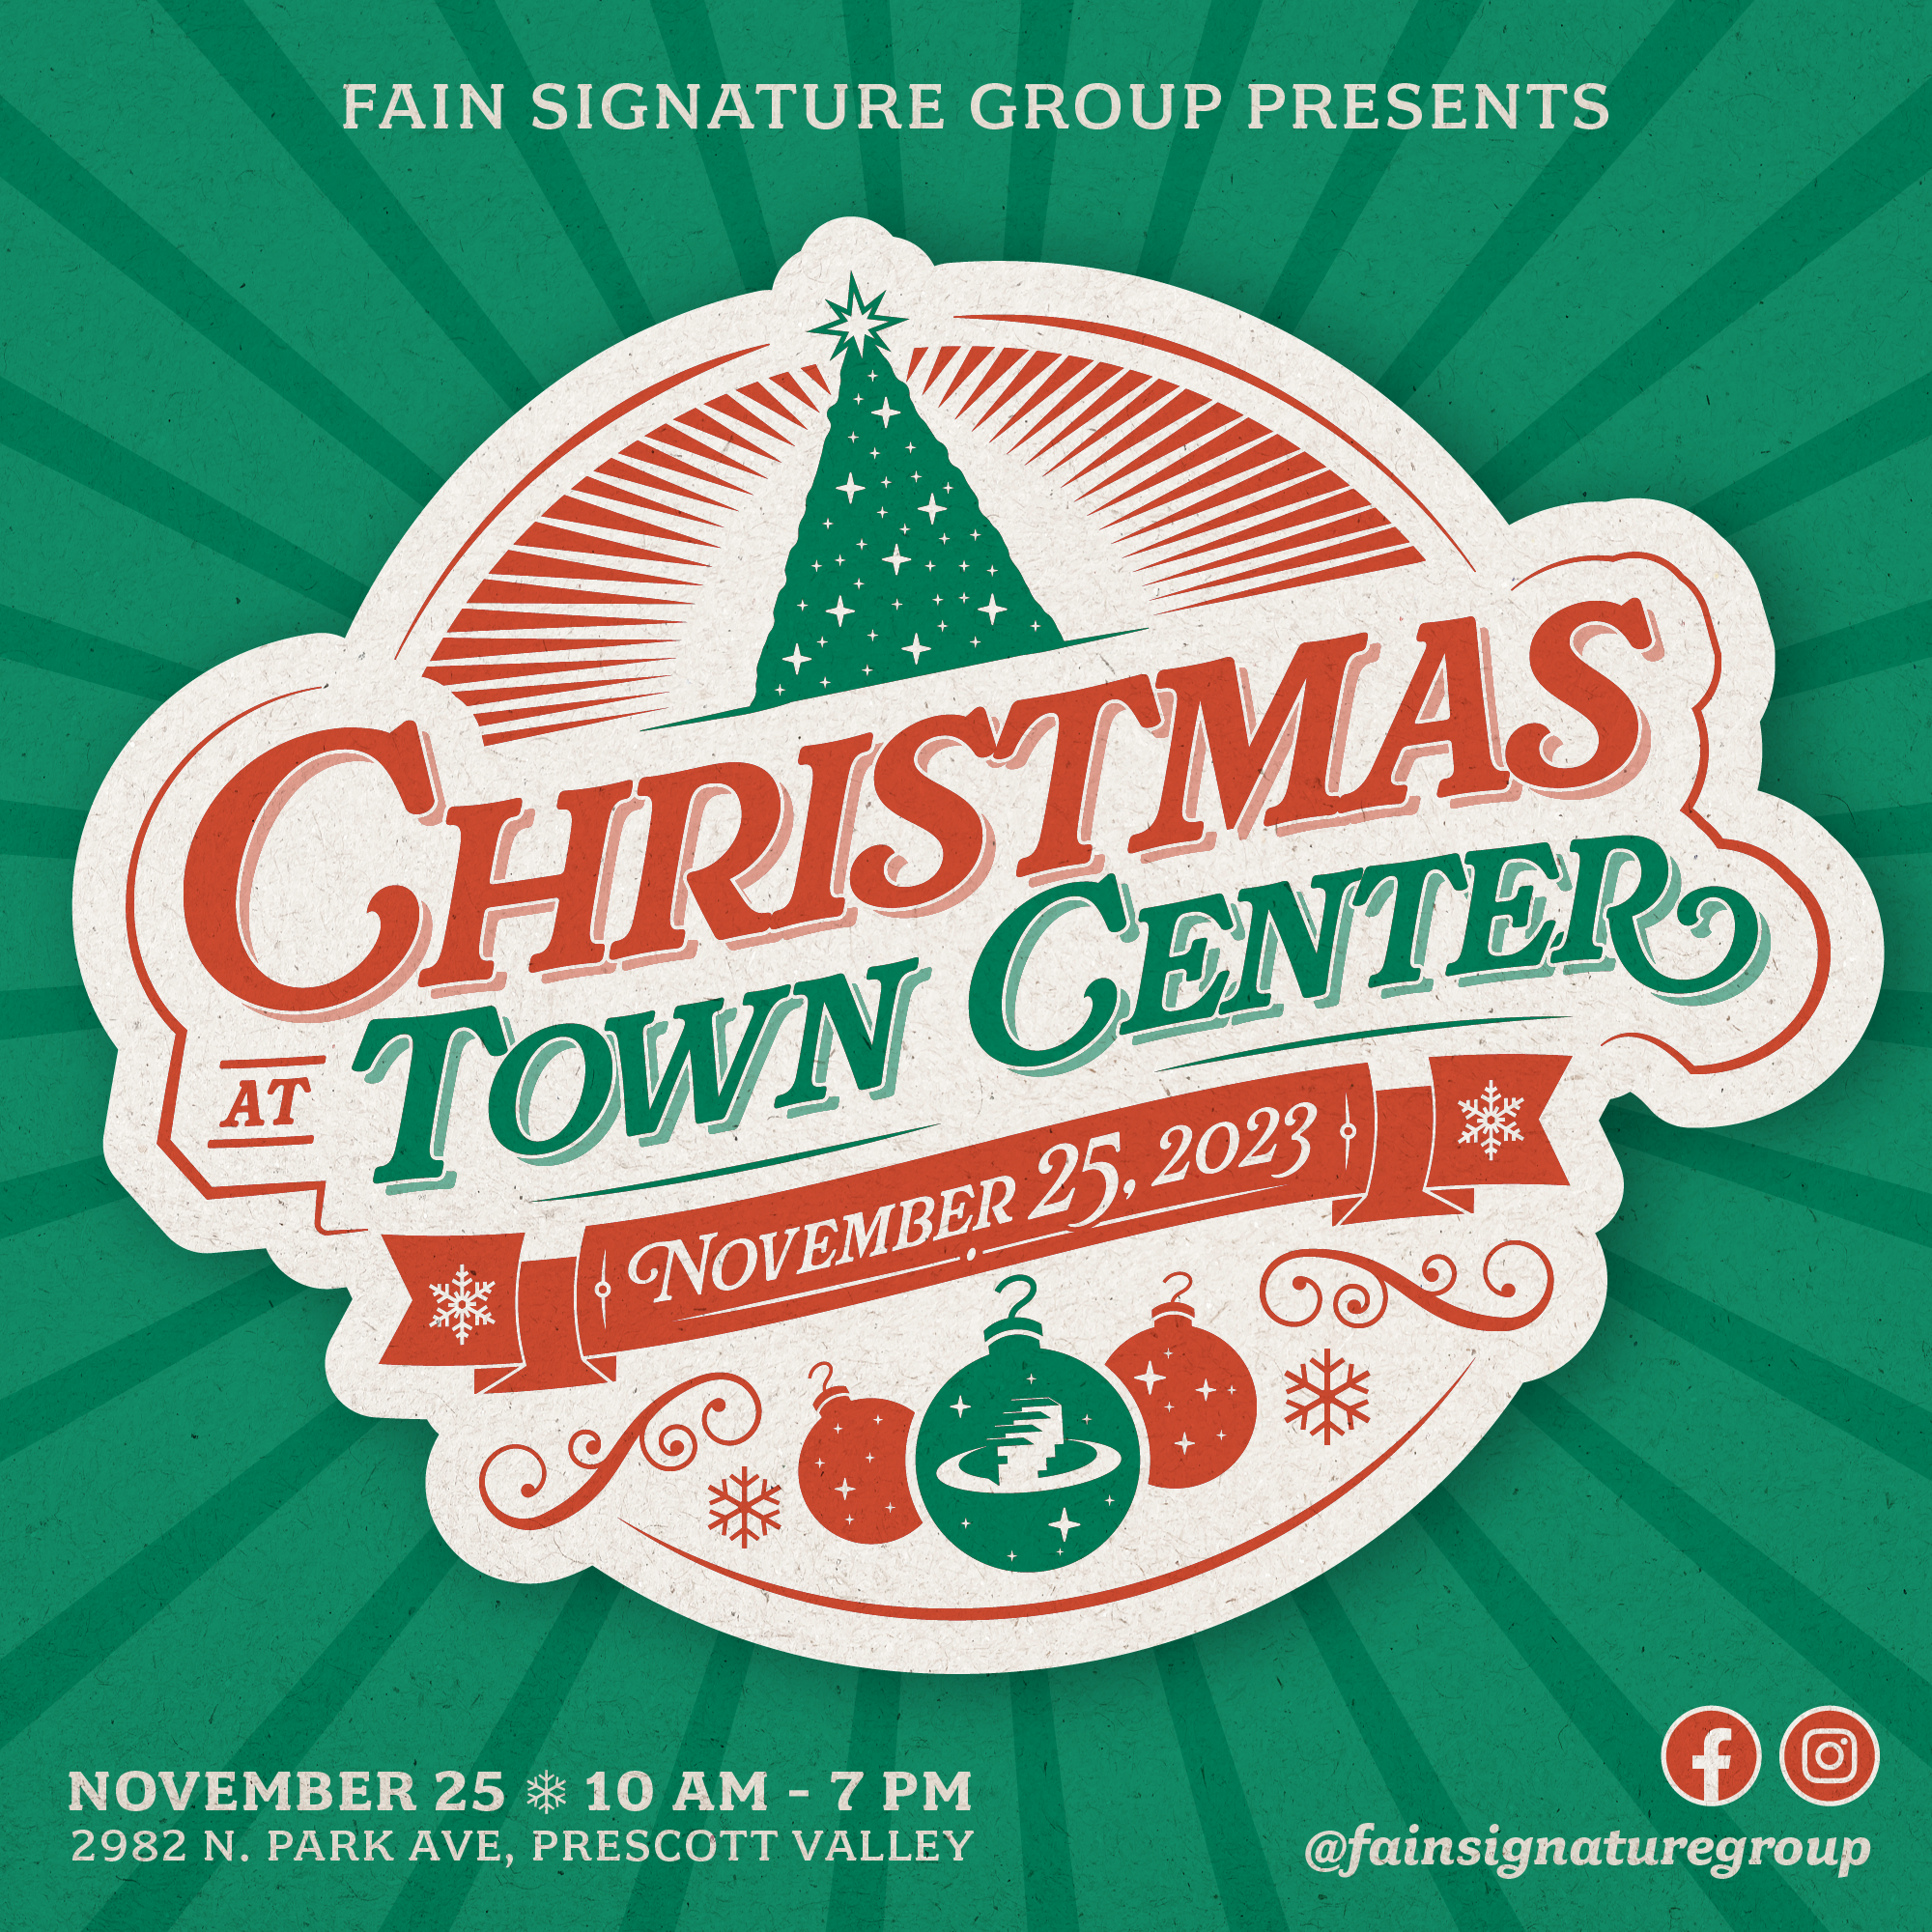 Christmas, town center, prescott valley, events, prescott, tree lighting, fain signature group, santa, games, market, snacks, family, kids, shopping, black friday